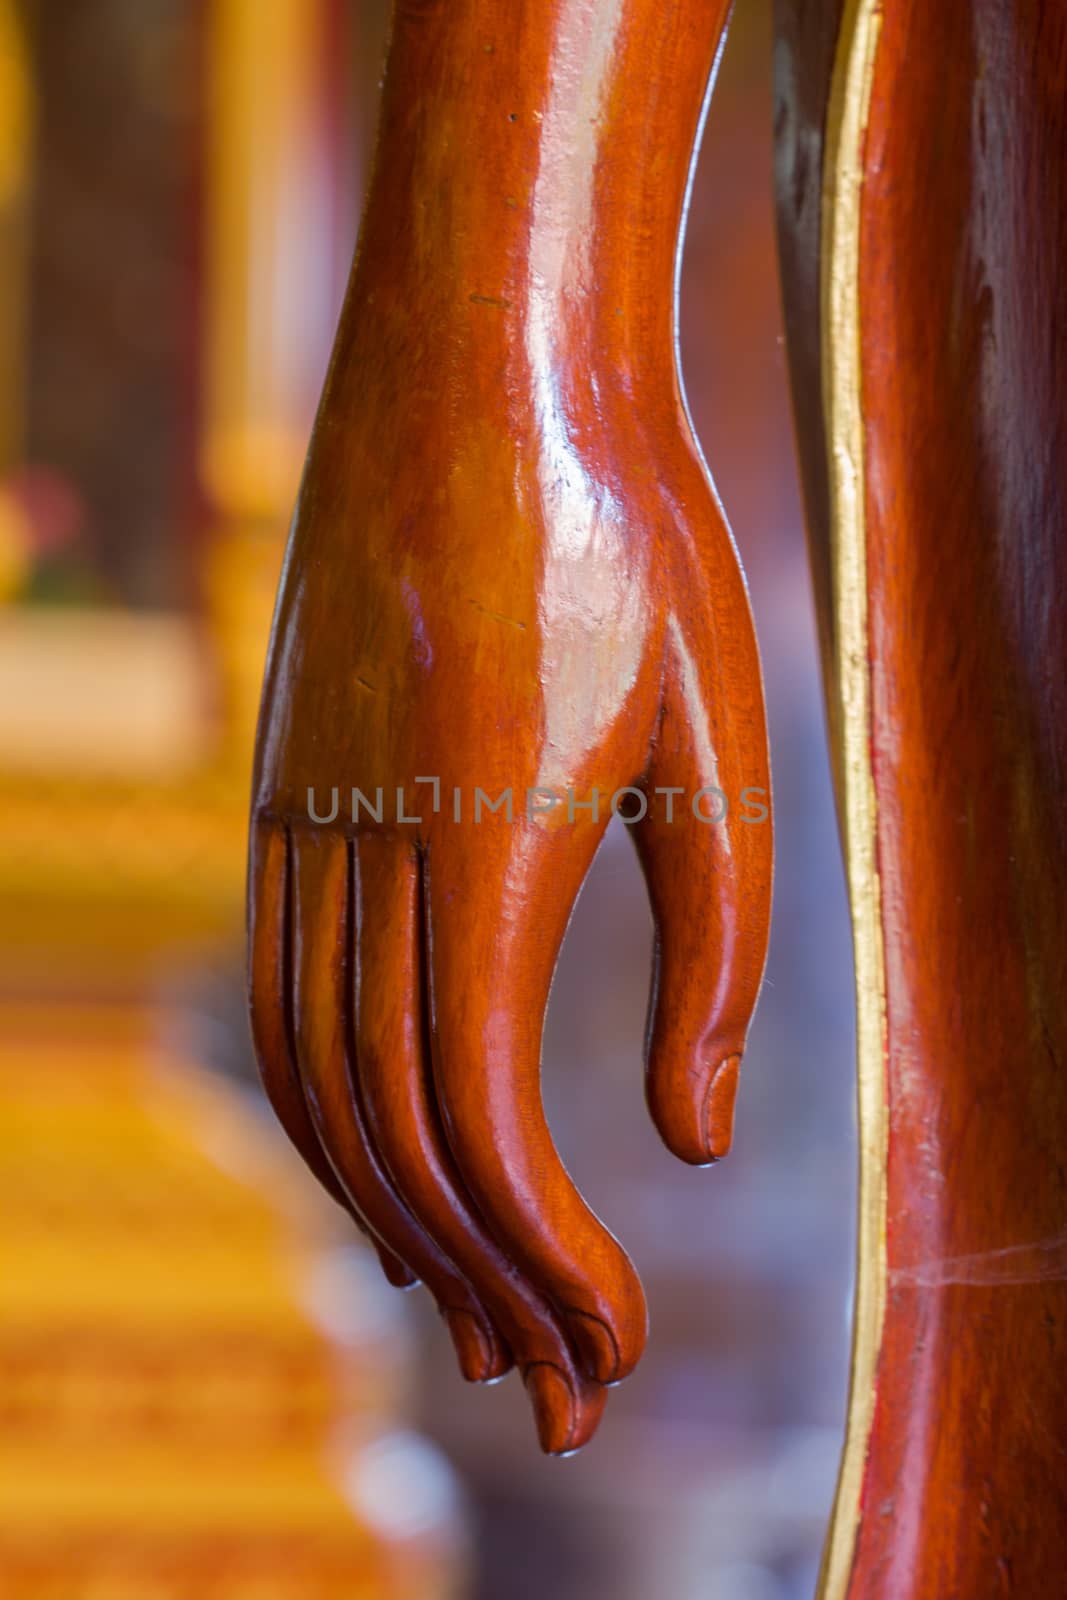 Hand of Buddha statue, wooden